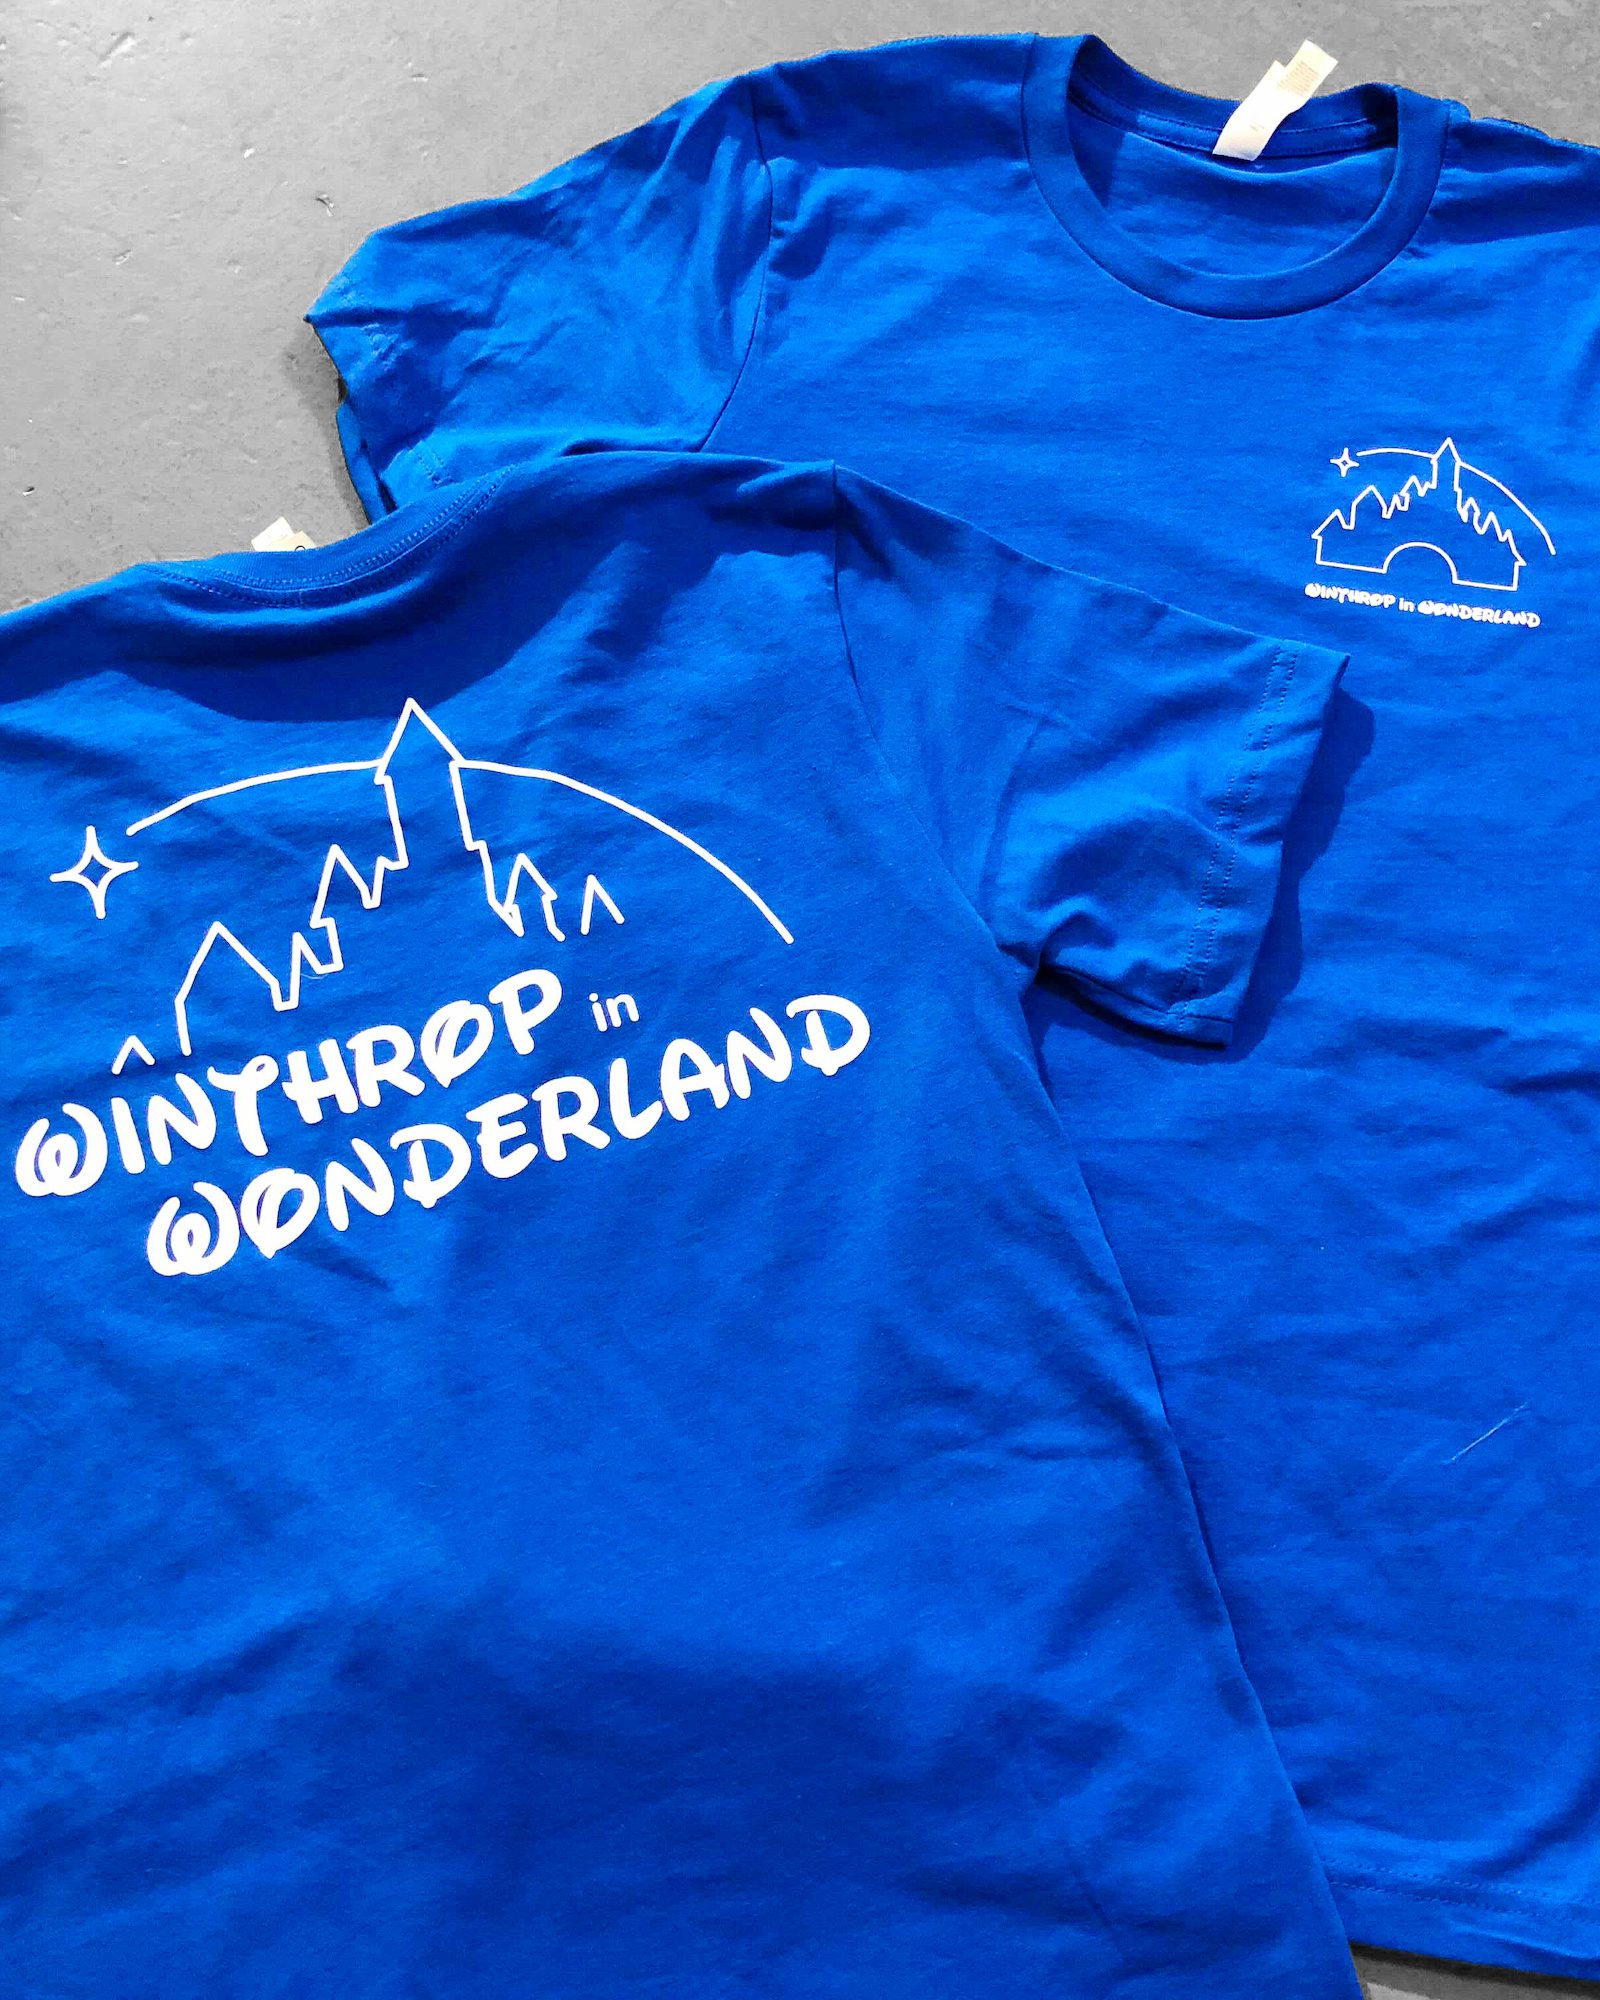 Winthrop University Wonderland - Event Shirt